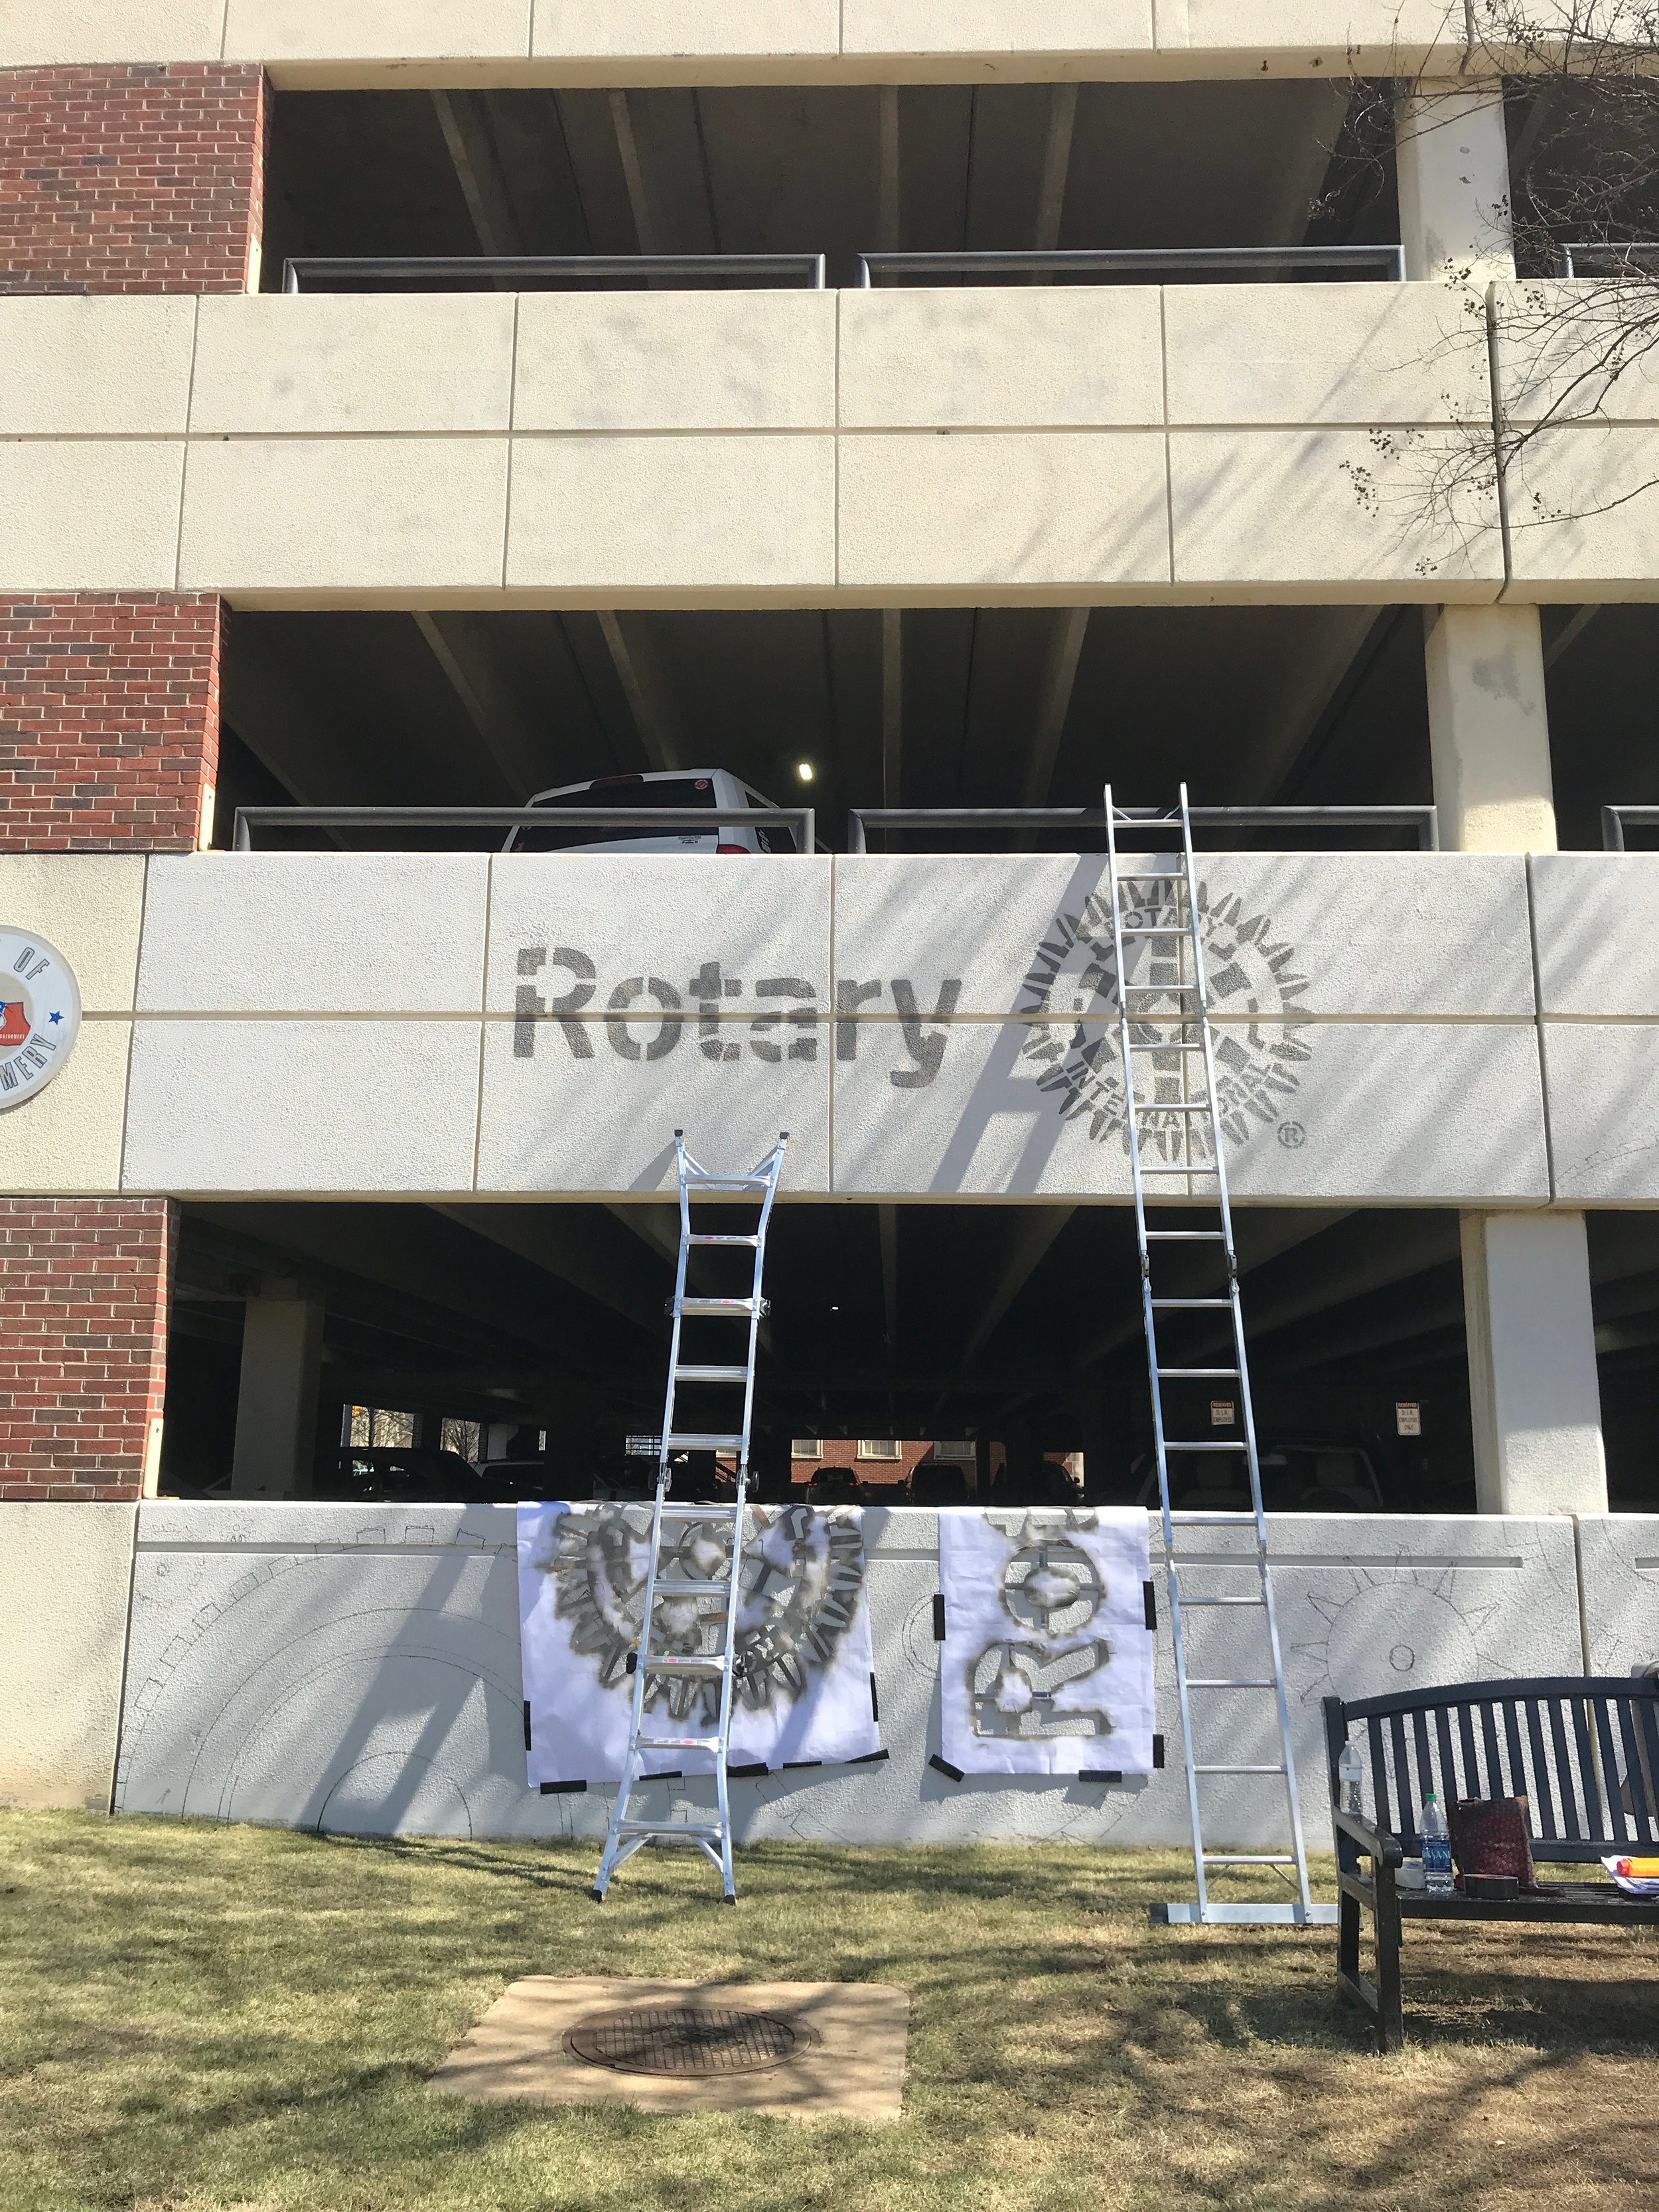  Day Four: Rotary Club logo stencil goes up! 